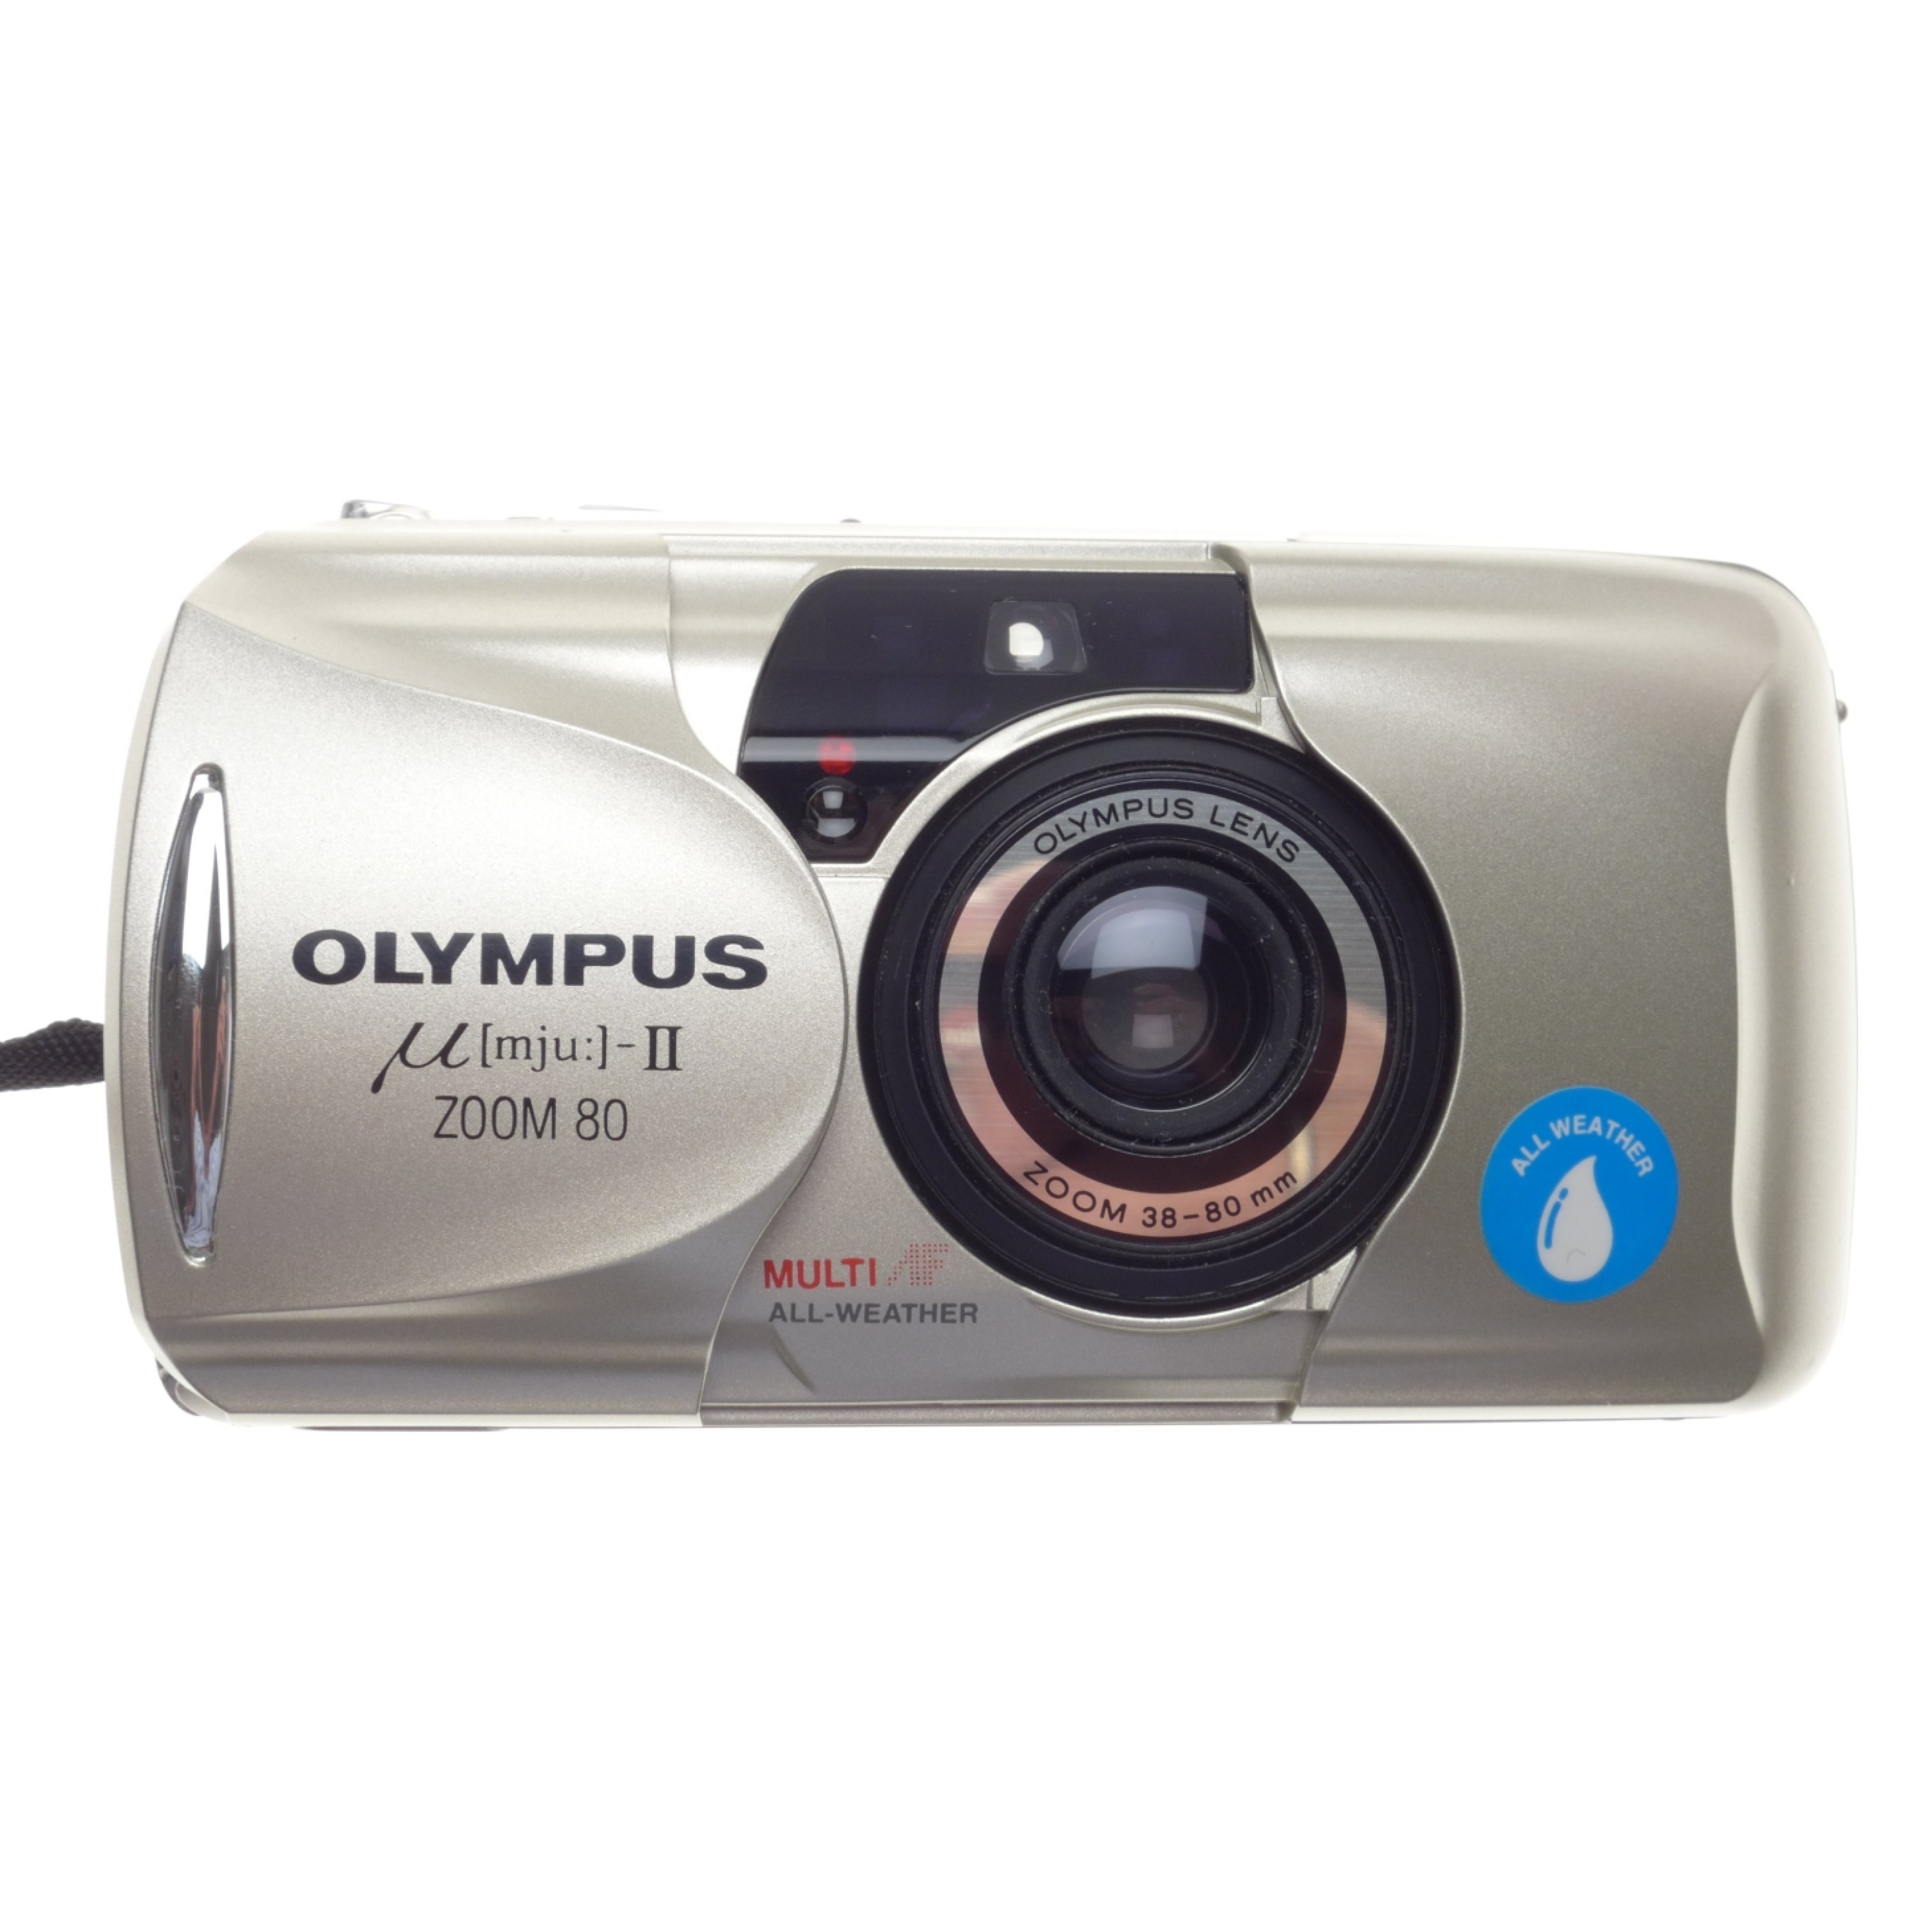 Cámara analógica Olympus mju II zoom 80 con objetivo 38-80mm de